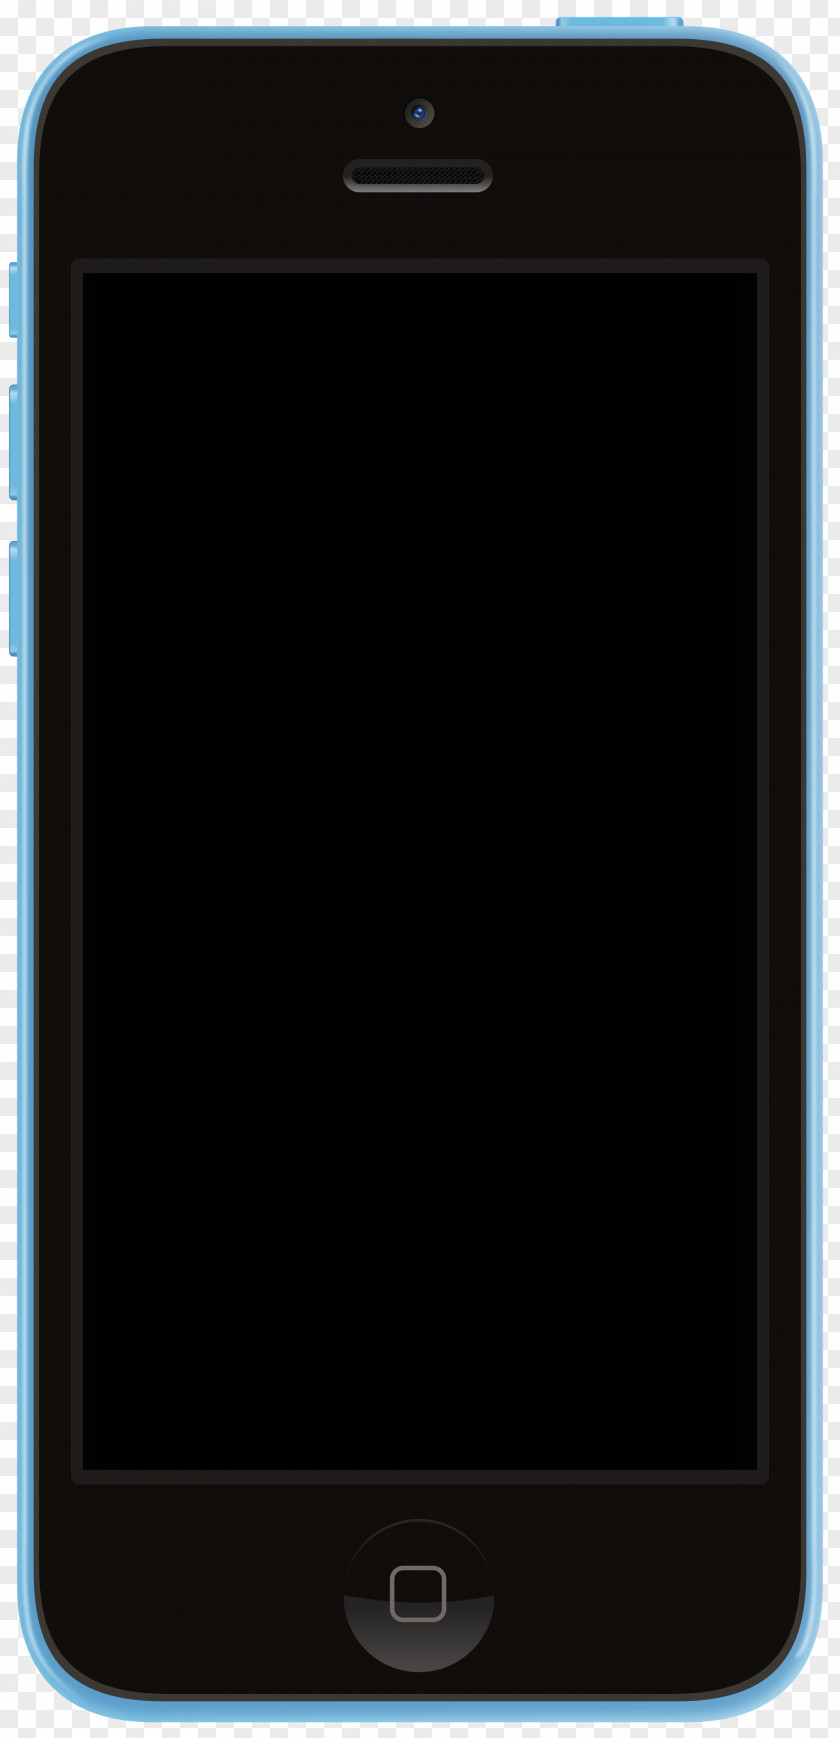 Iphone Samsung Galaxy A3 (2017) (2015) LG Optimus Black Smartphone Telephone PNG